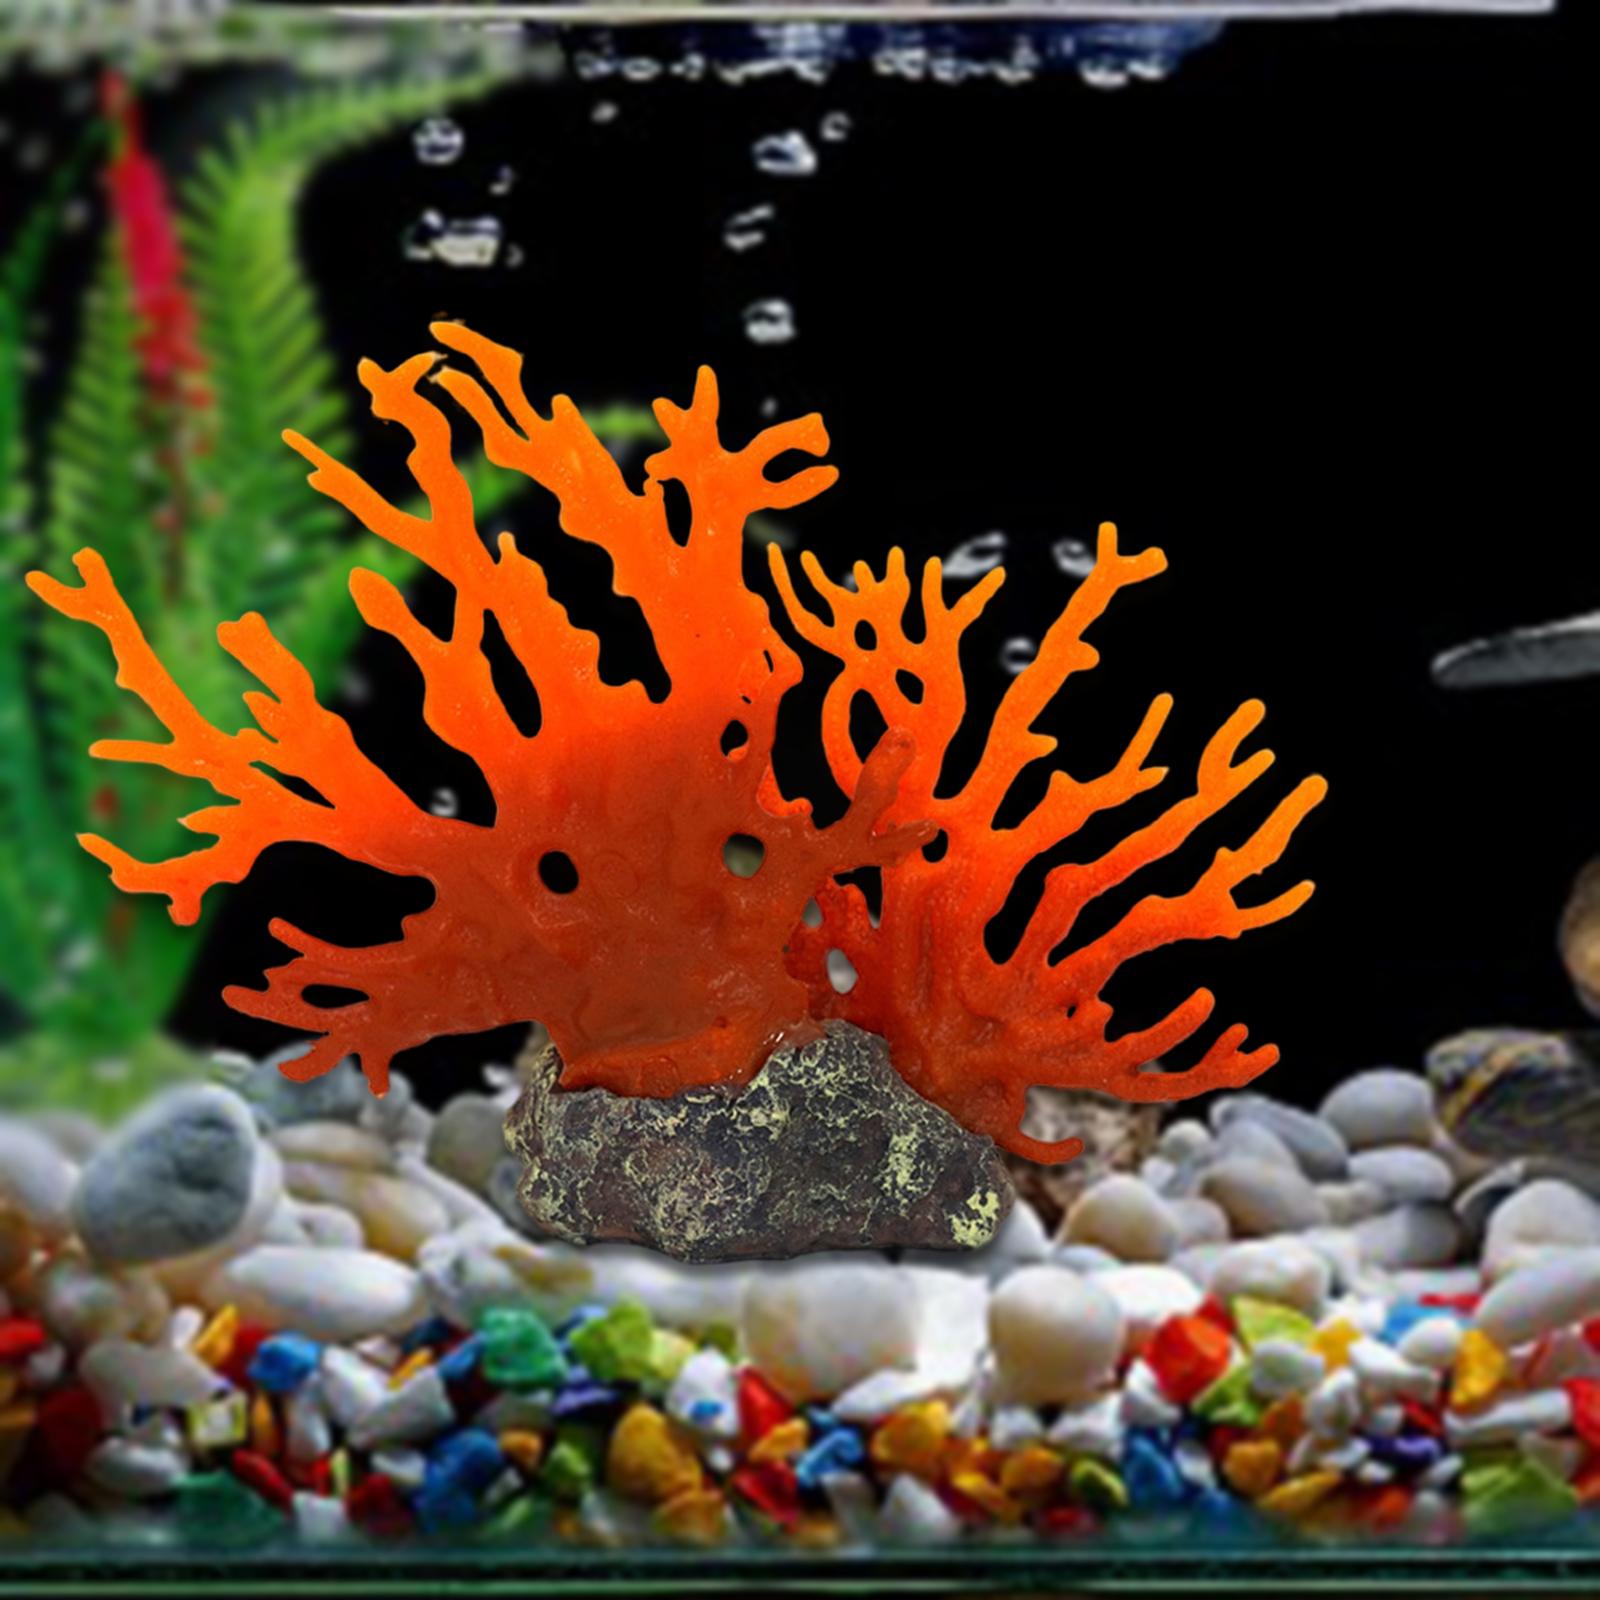 Resin Simulation Coral tree Fish Tank Decor Landscaping Decor orange